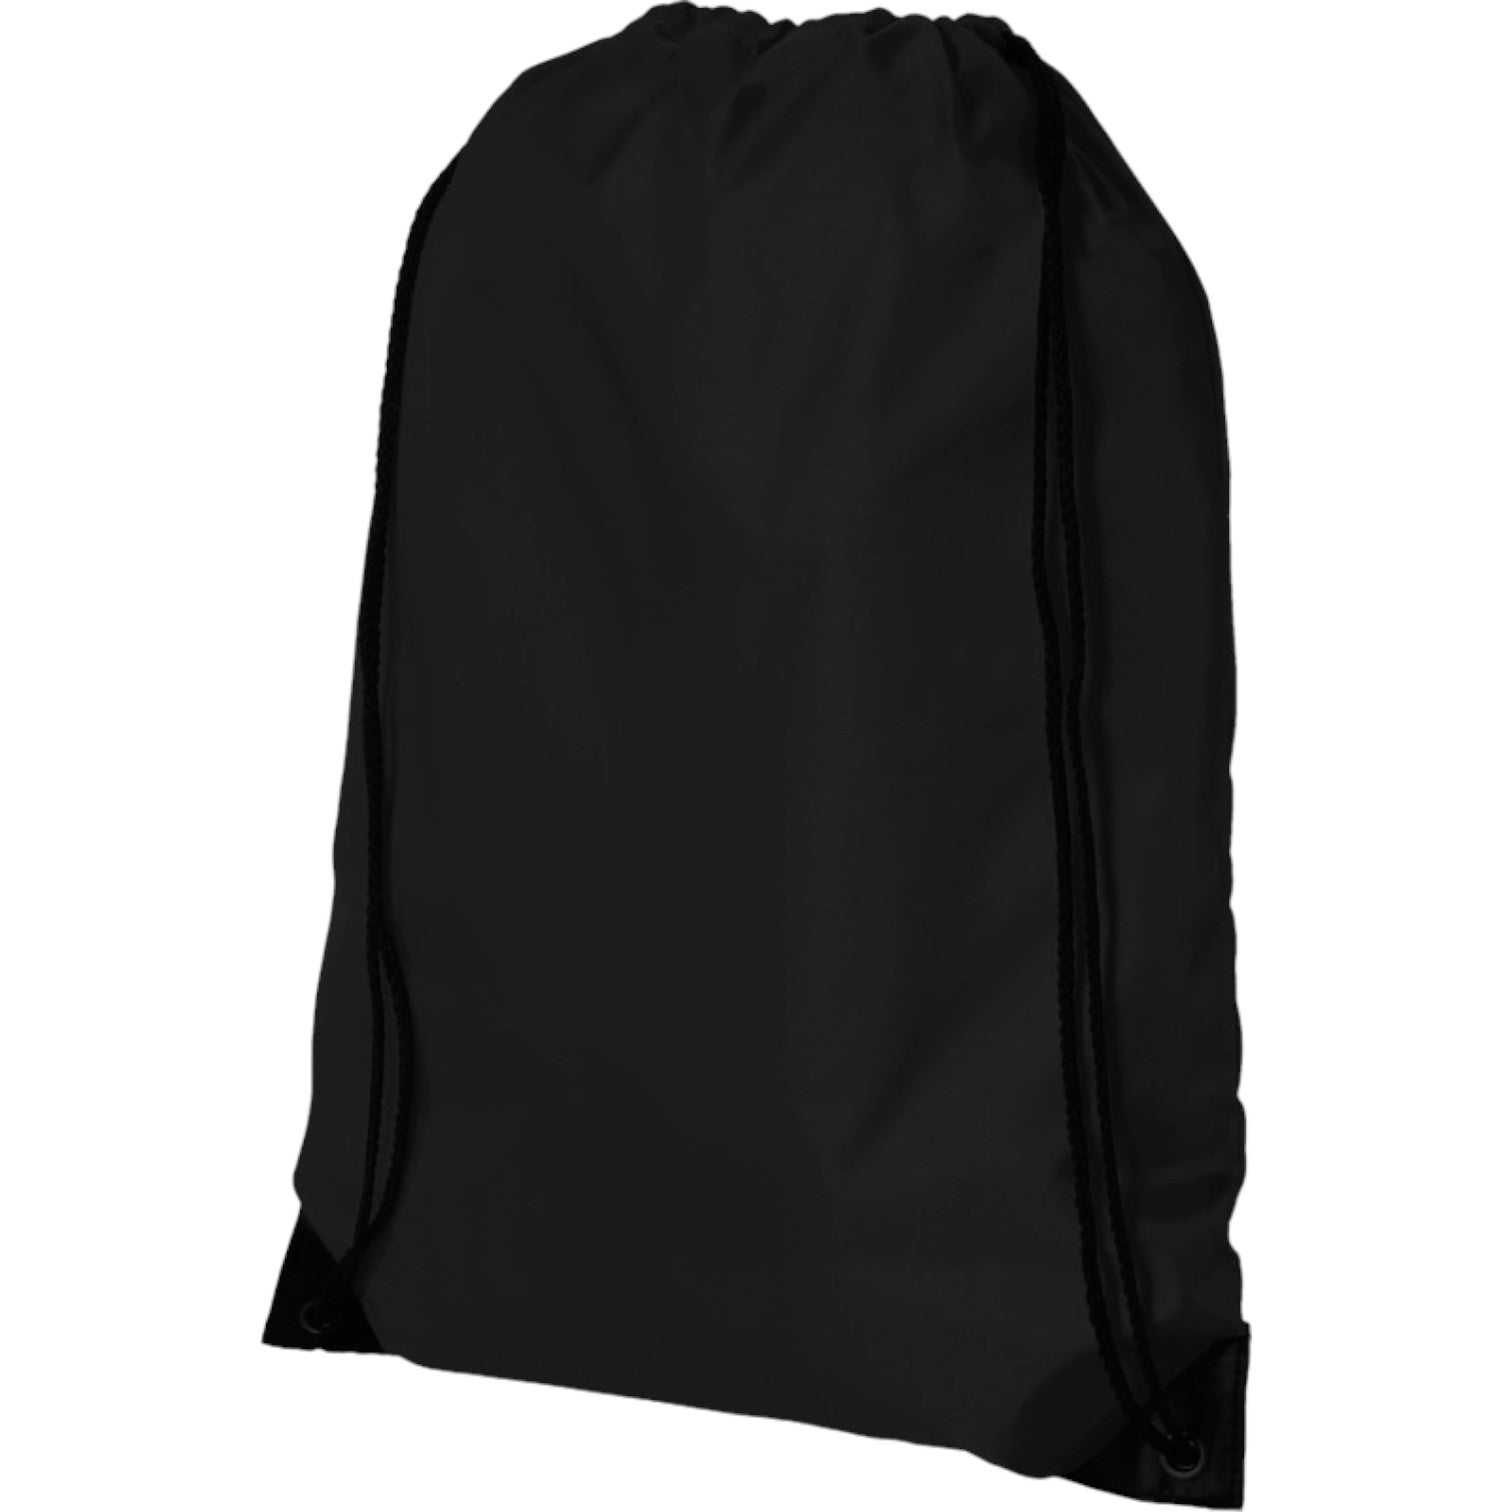 210D Polyster Drawstring Bag - Black